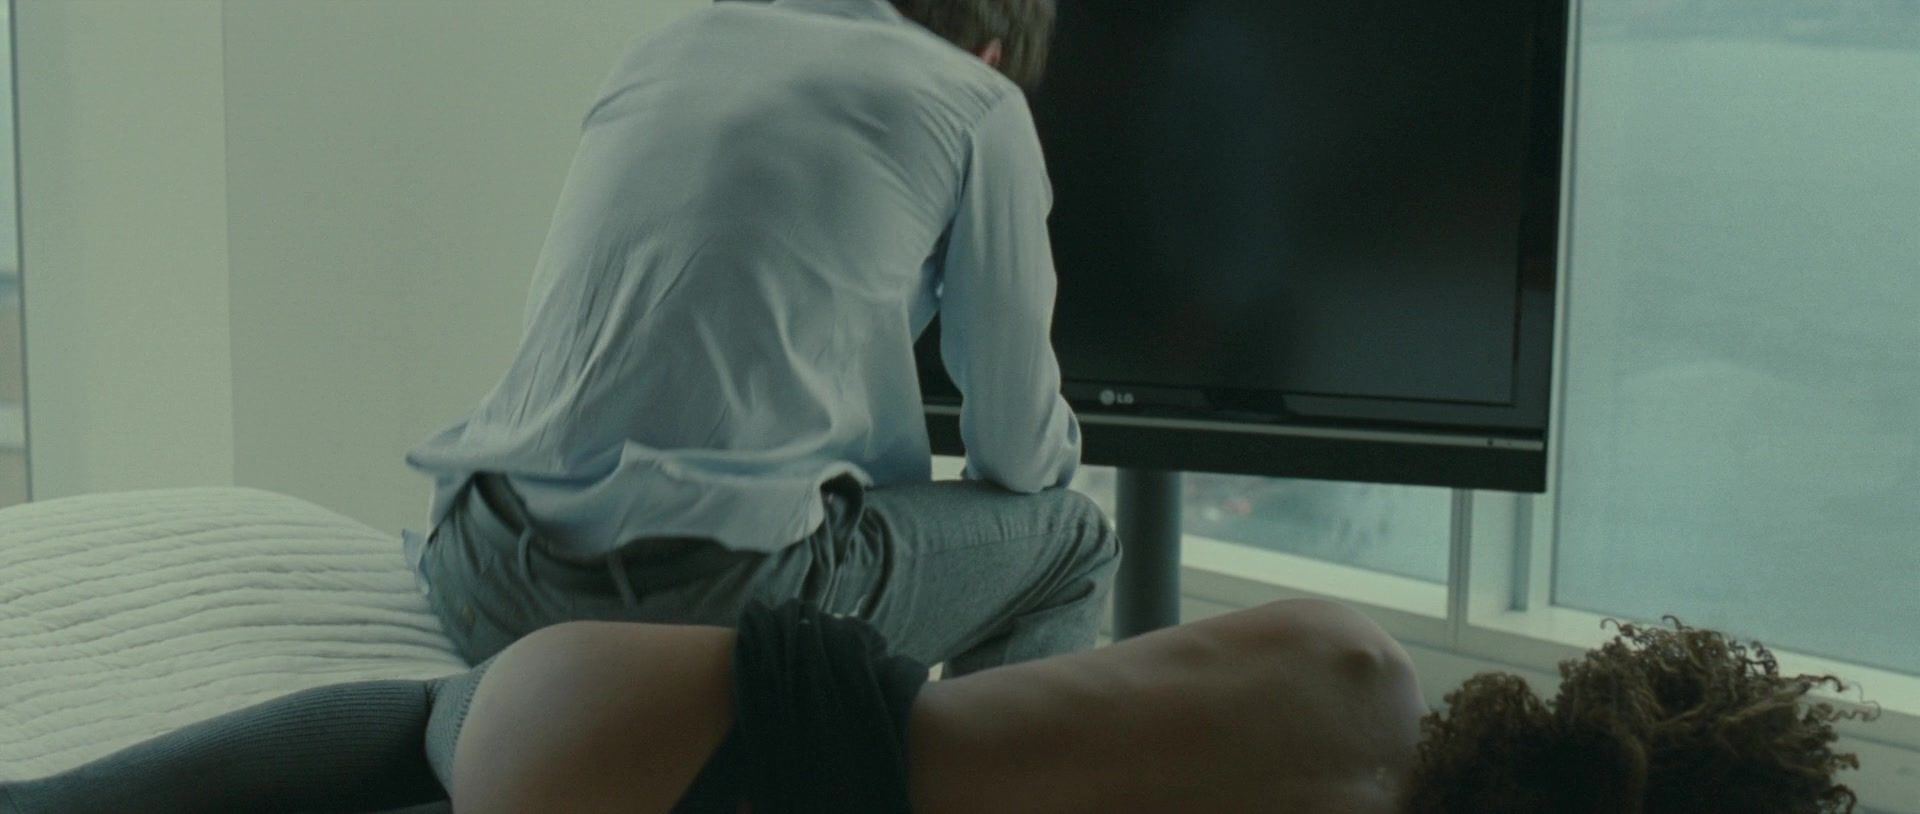 Horny Interracial toples sex scene | Celebrity: Nicole Beharie | The Adult Movie "Shame" | Released in 2011 Stranger - 1